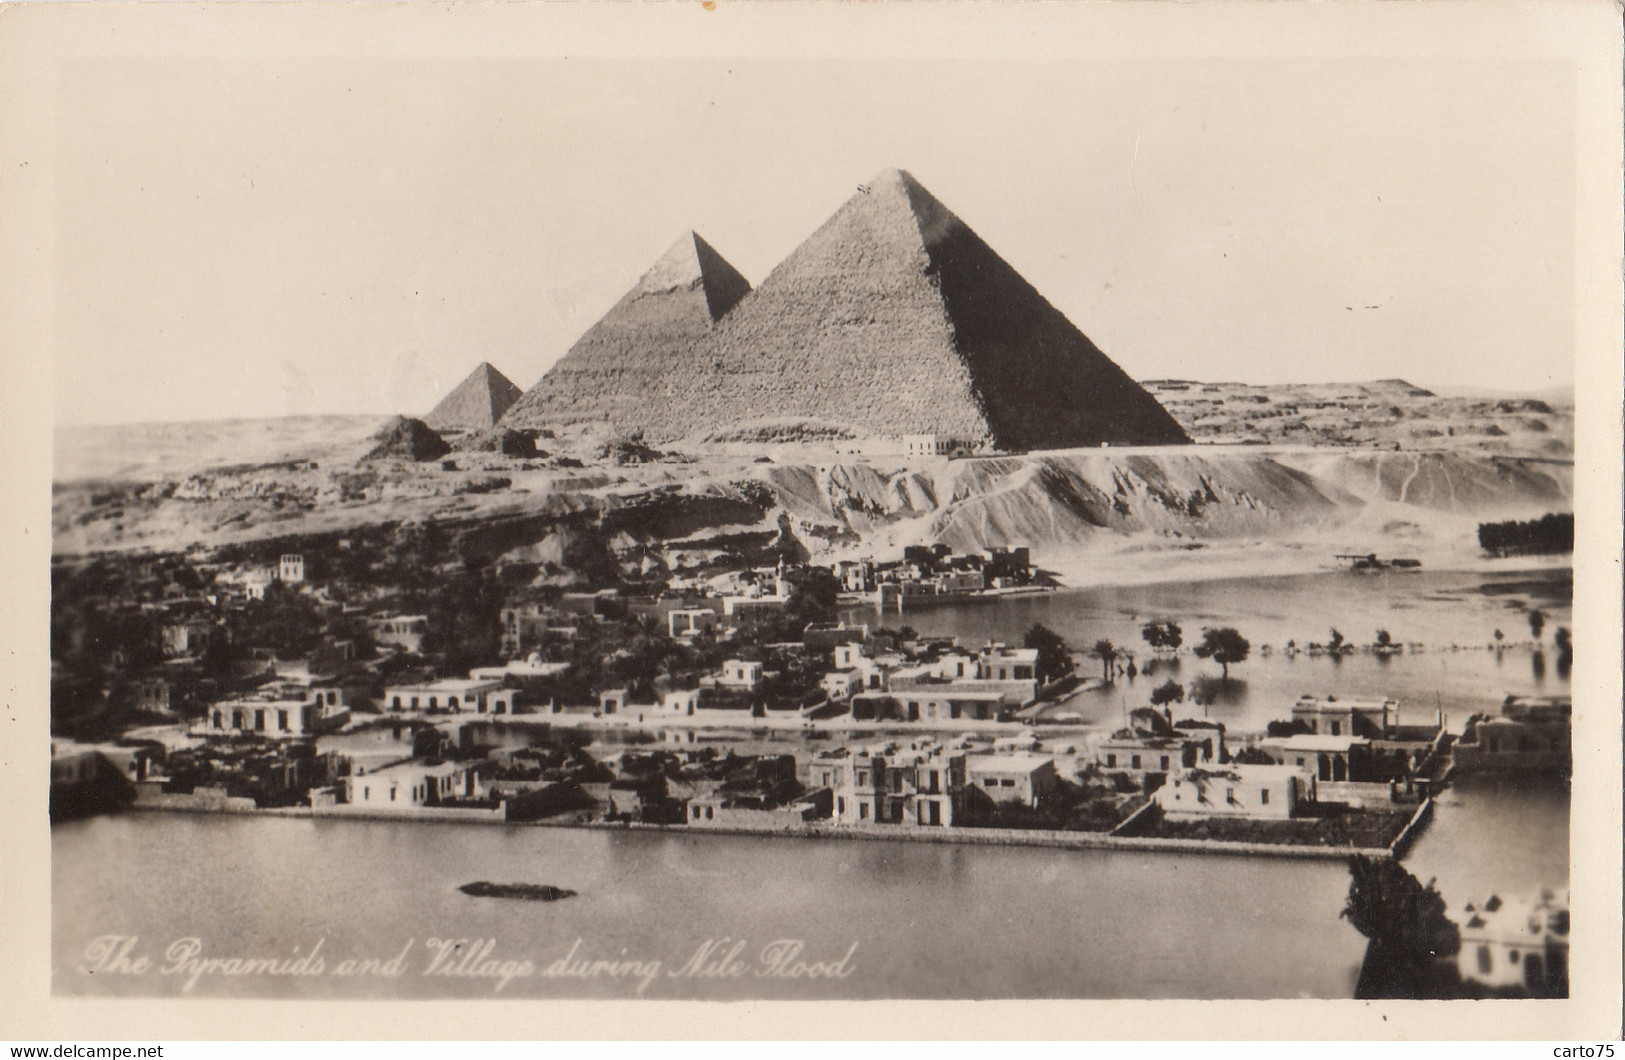 Egypte - Cairo Le Caire Pyramides - Pyramides De Gizehet Village - Inondations Du Nil - Flooding Of The Nile - Pyramides